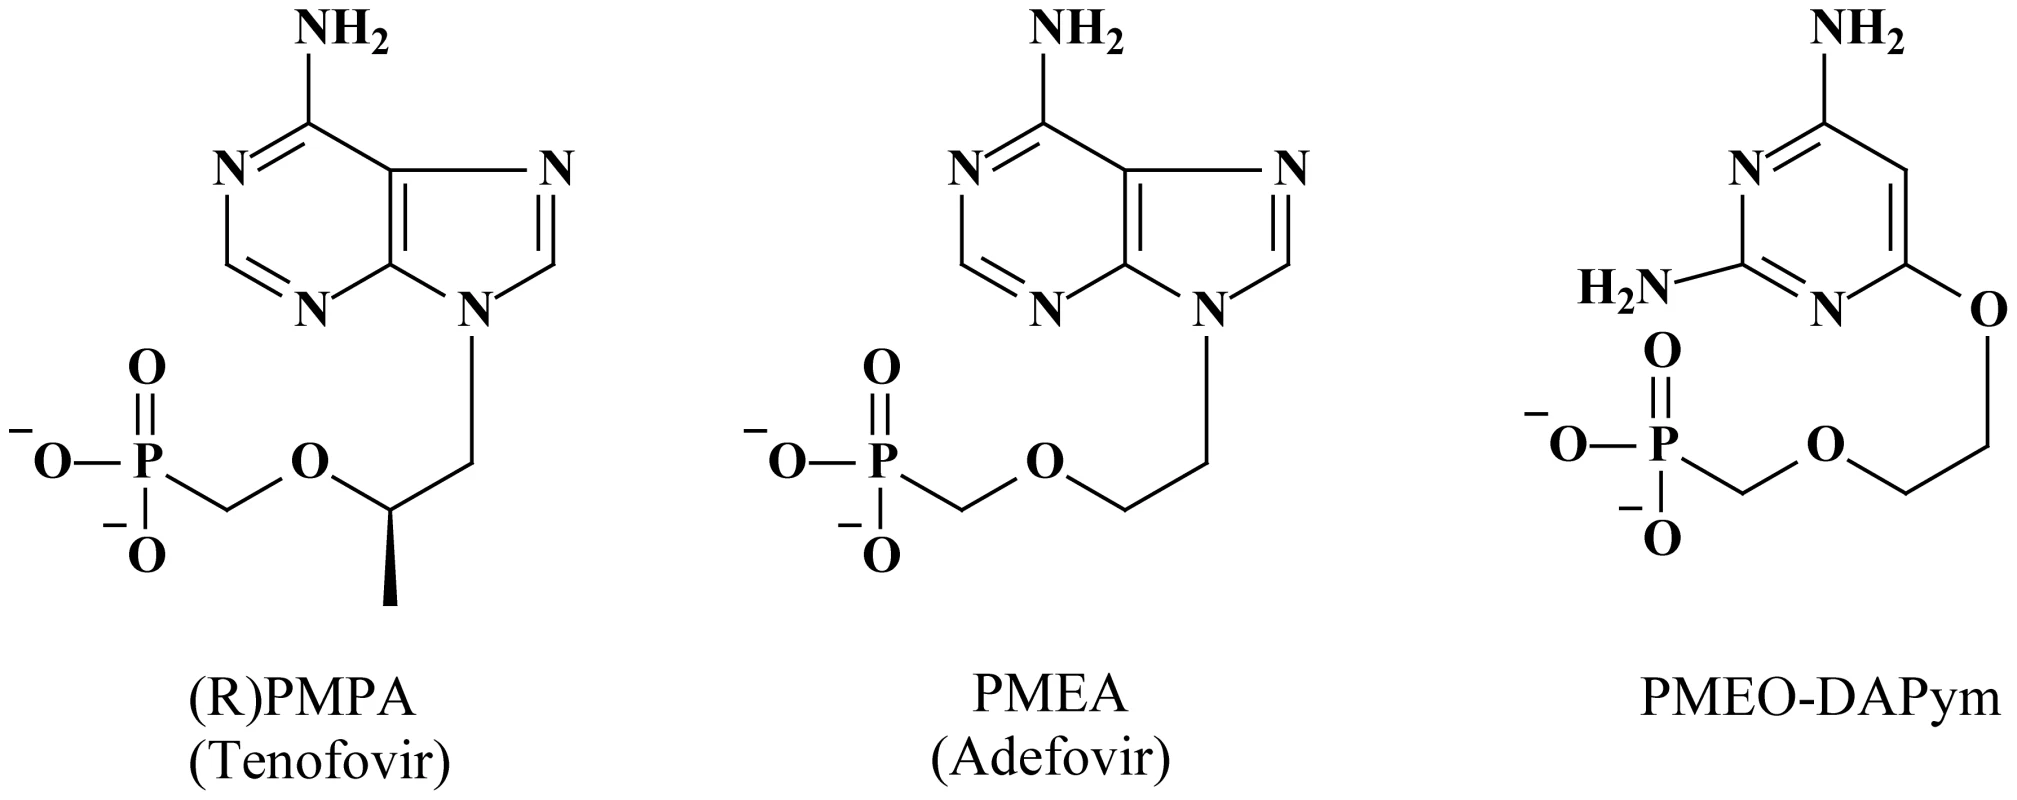 Structural formulae of the acyclic nucleoside phosphonates.